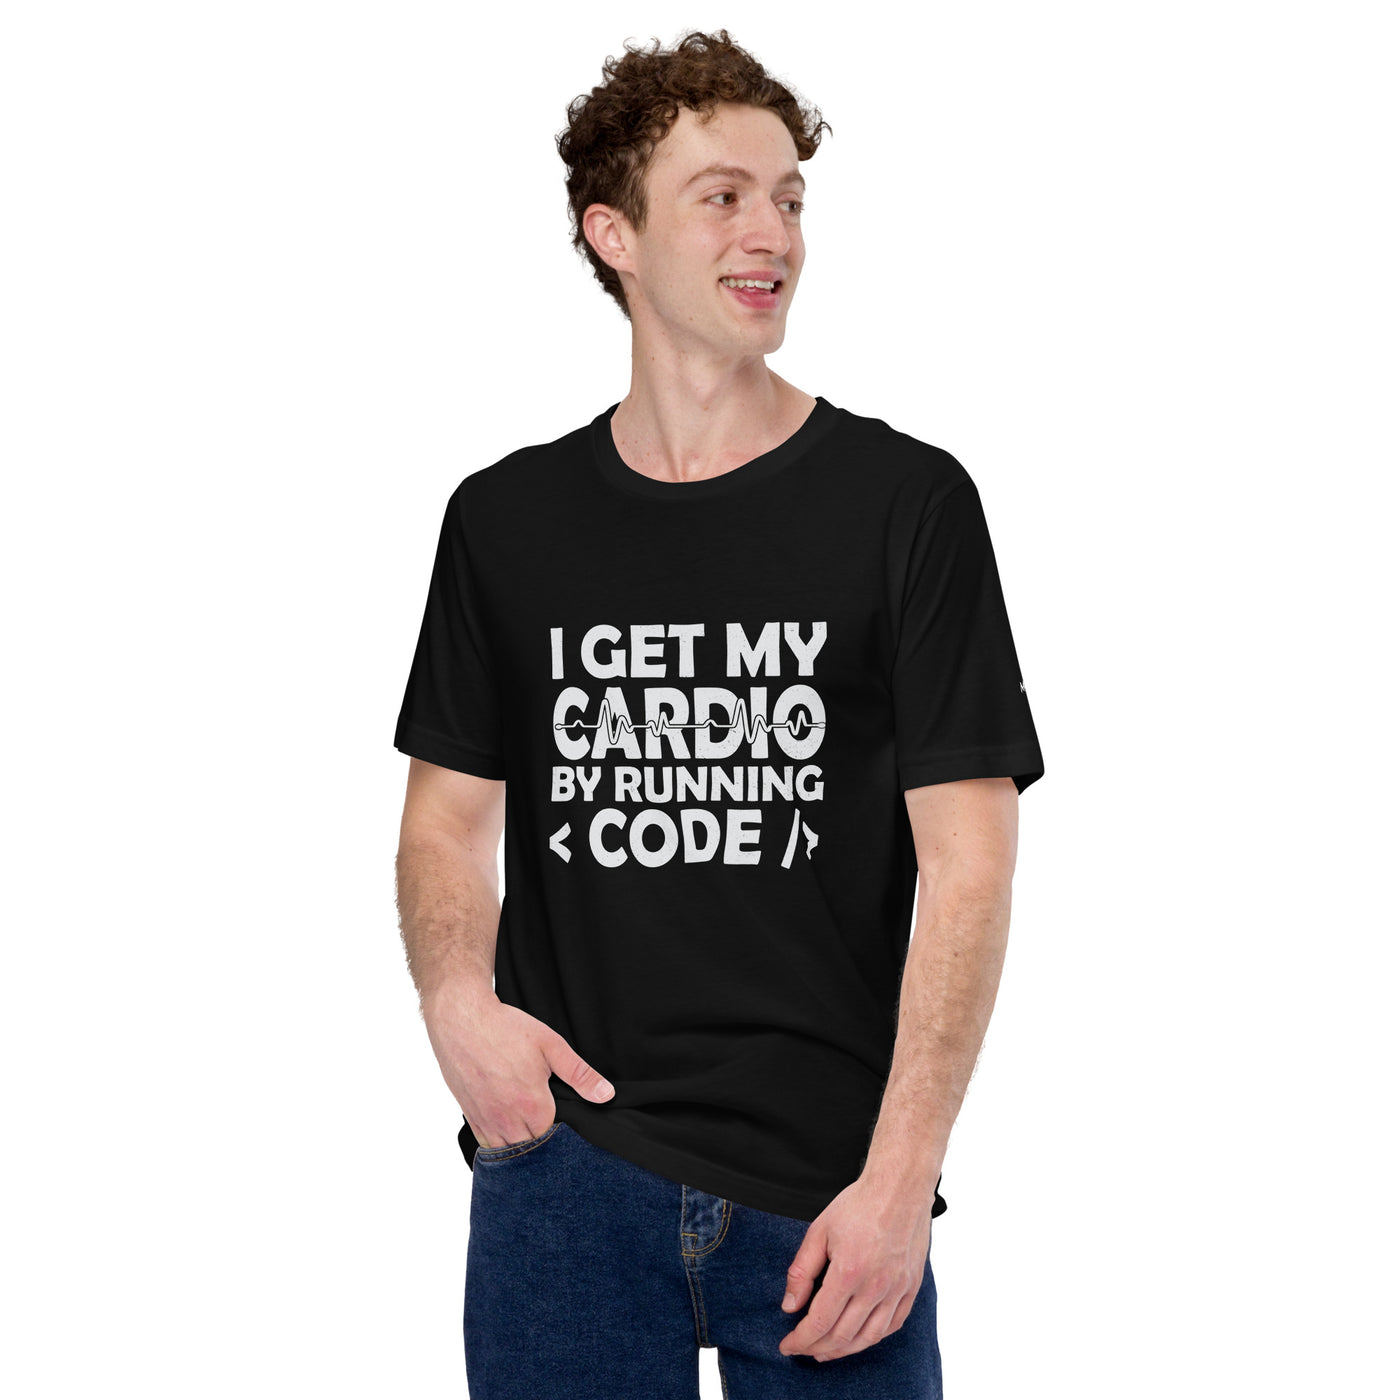 I Get my Cardio by Running Code - Unisex t-shirt